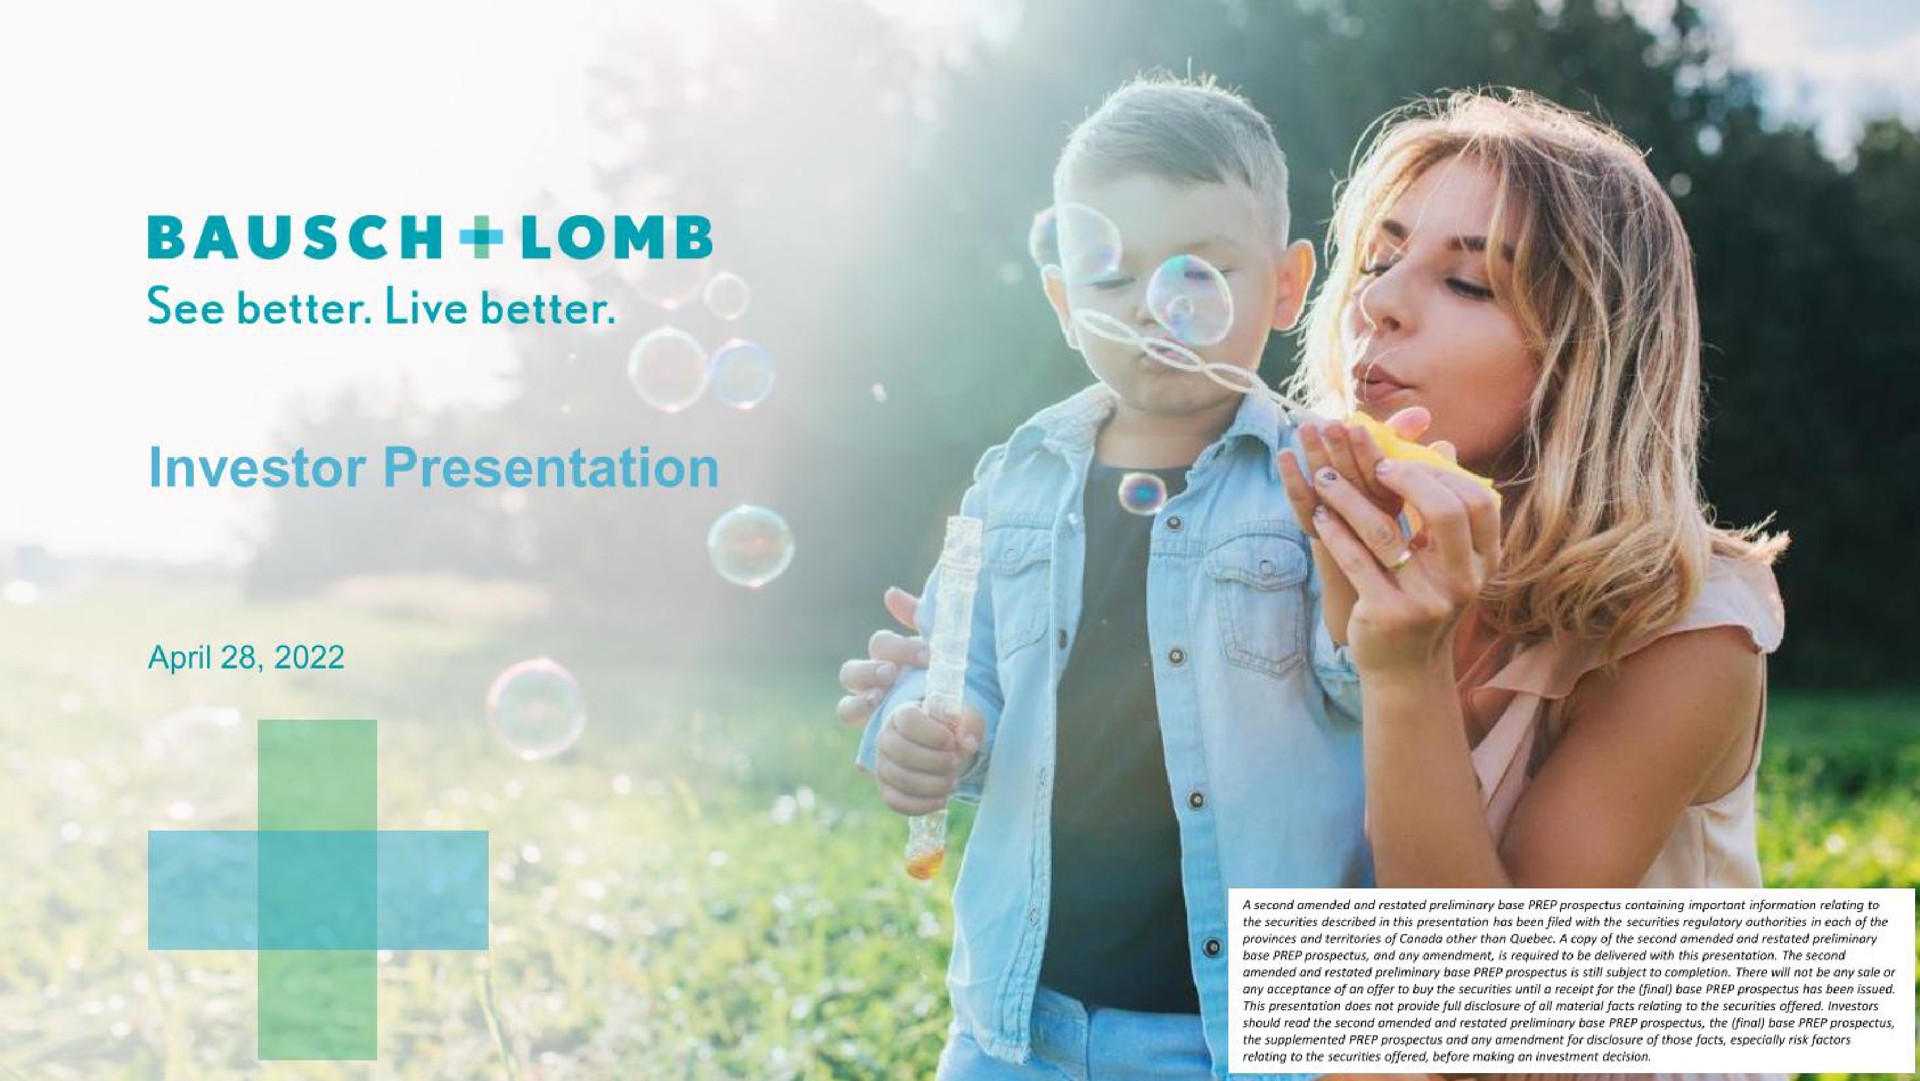 see better live better investor presentation | Bausch+Lomb